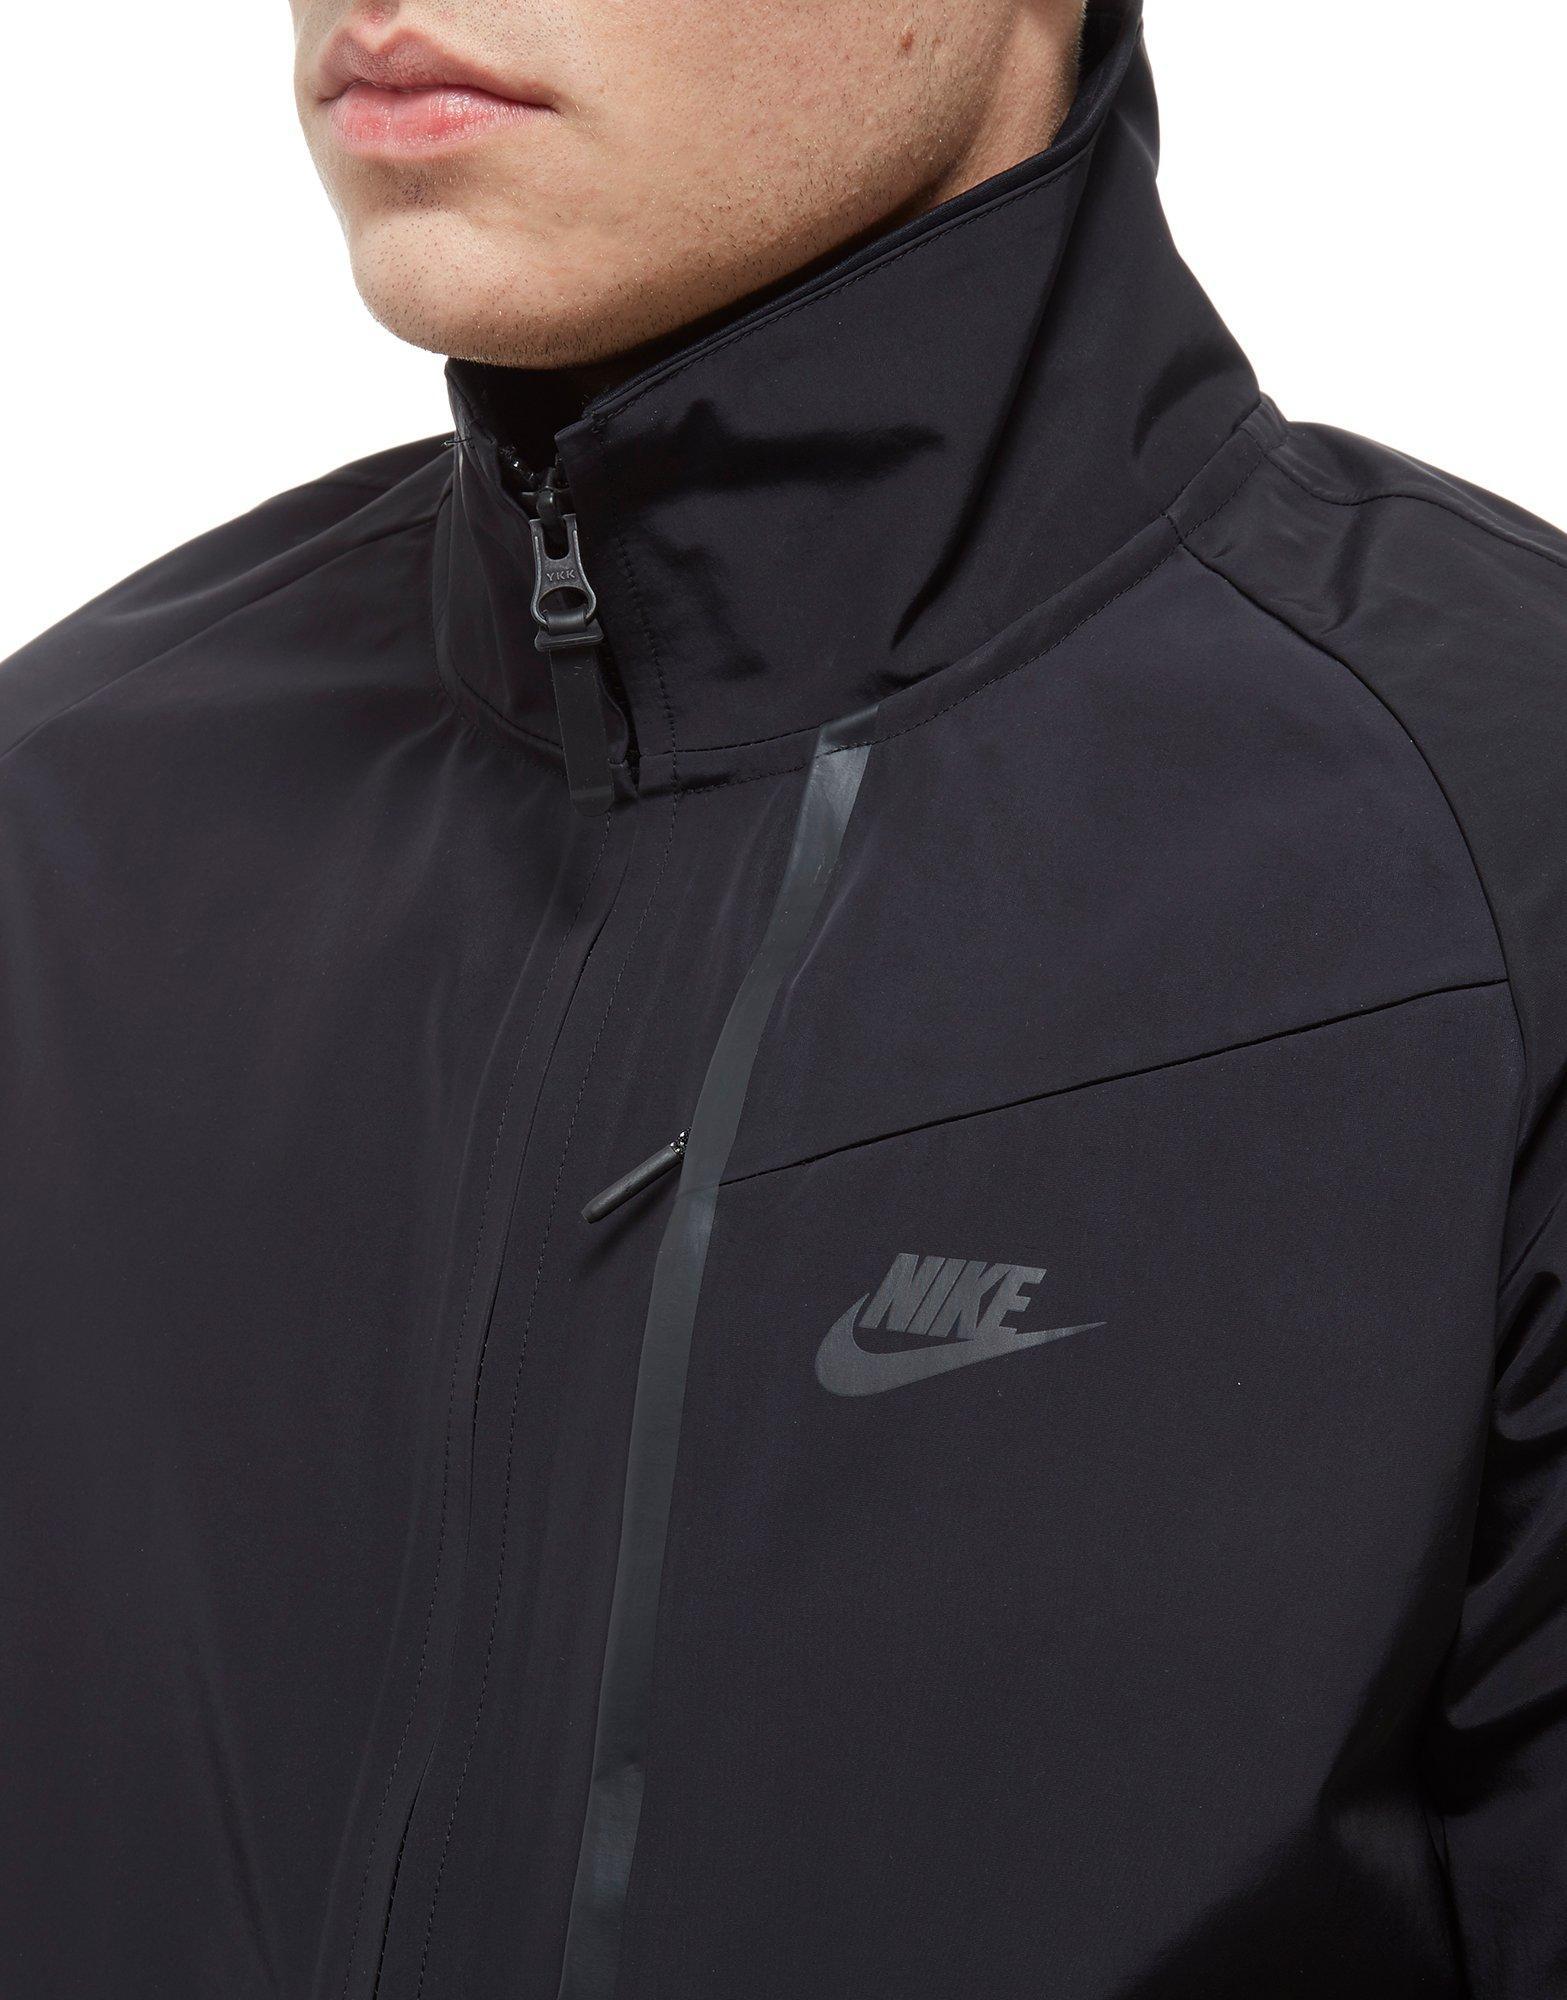 Nike Synthetic Tech Woven Track Jacket in Black for Men - Lyst